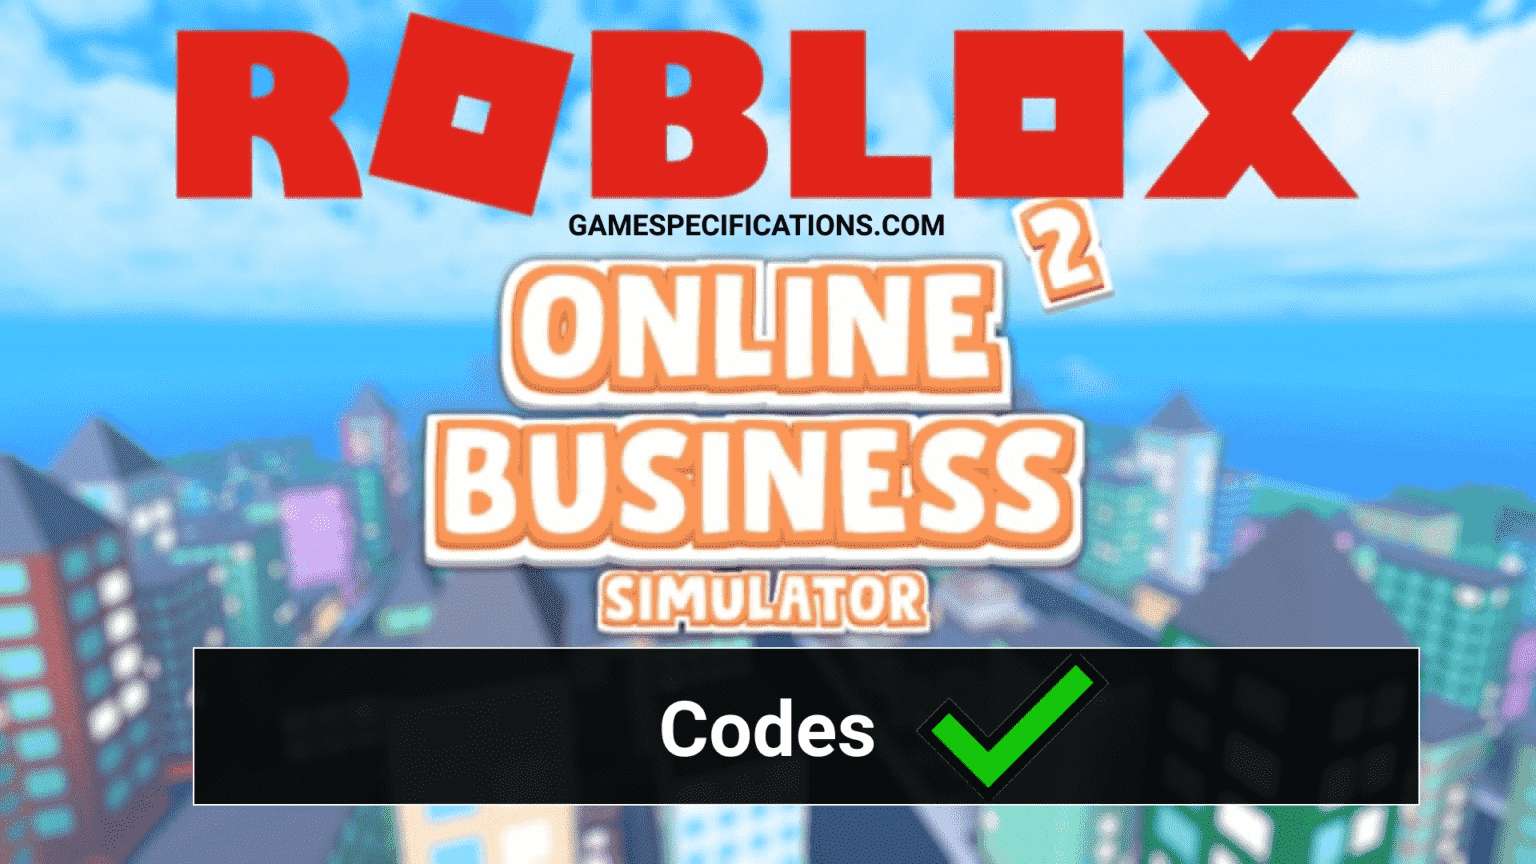 Business Simulator Codes Roblox